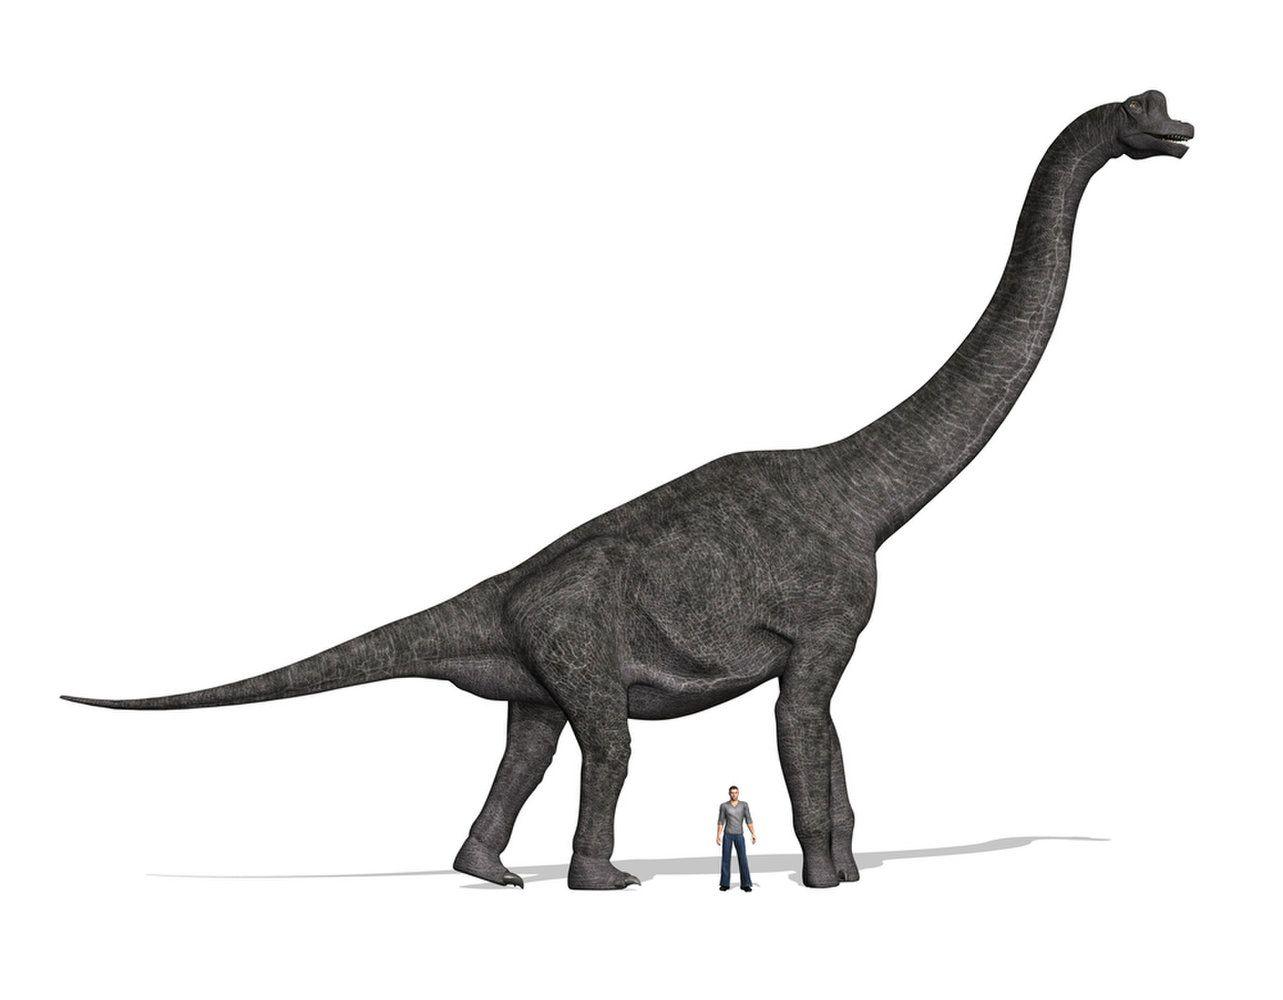 Brachiosaurus stood taller than most dinosaurs, on forelegs